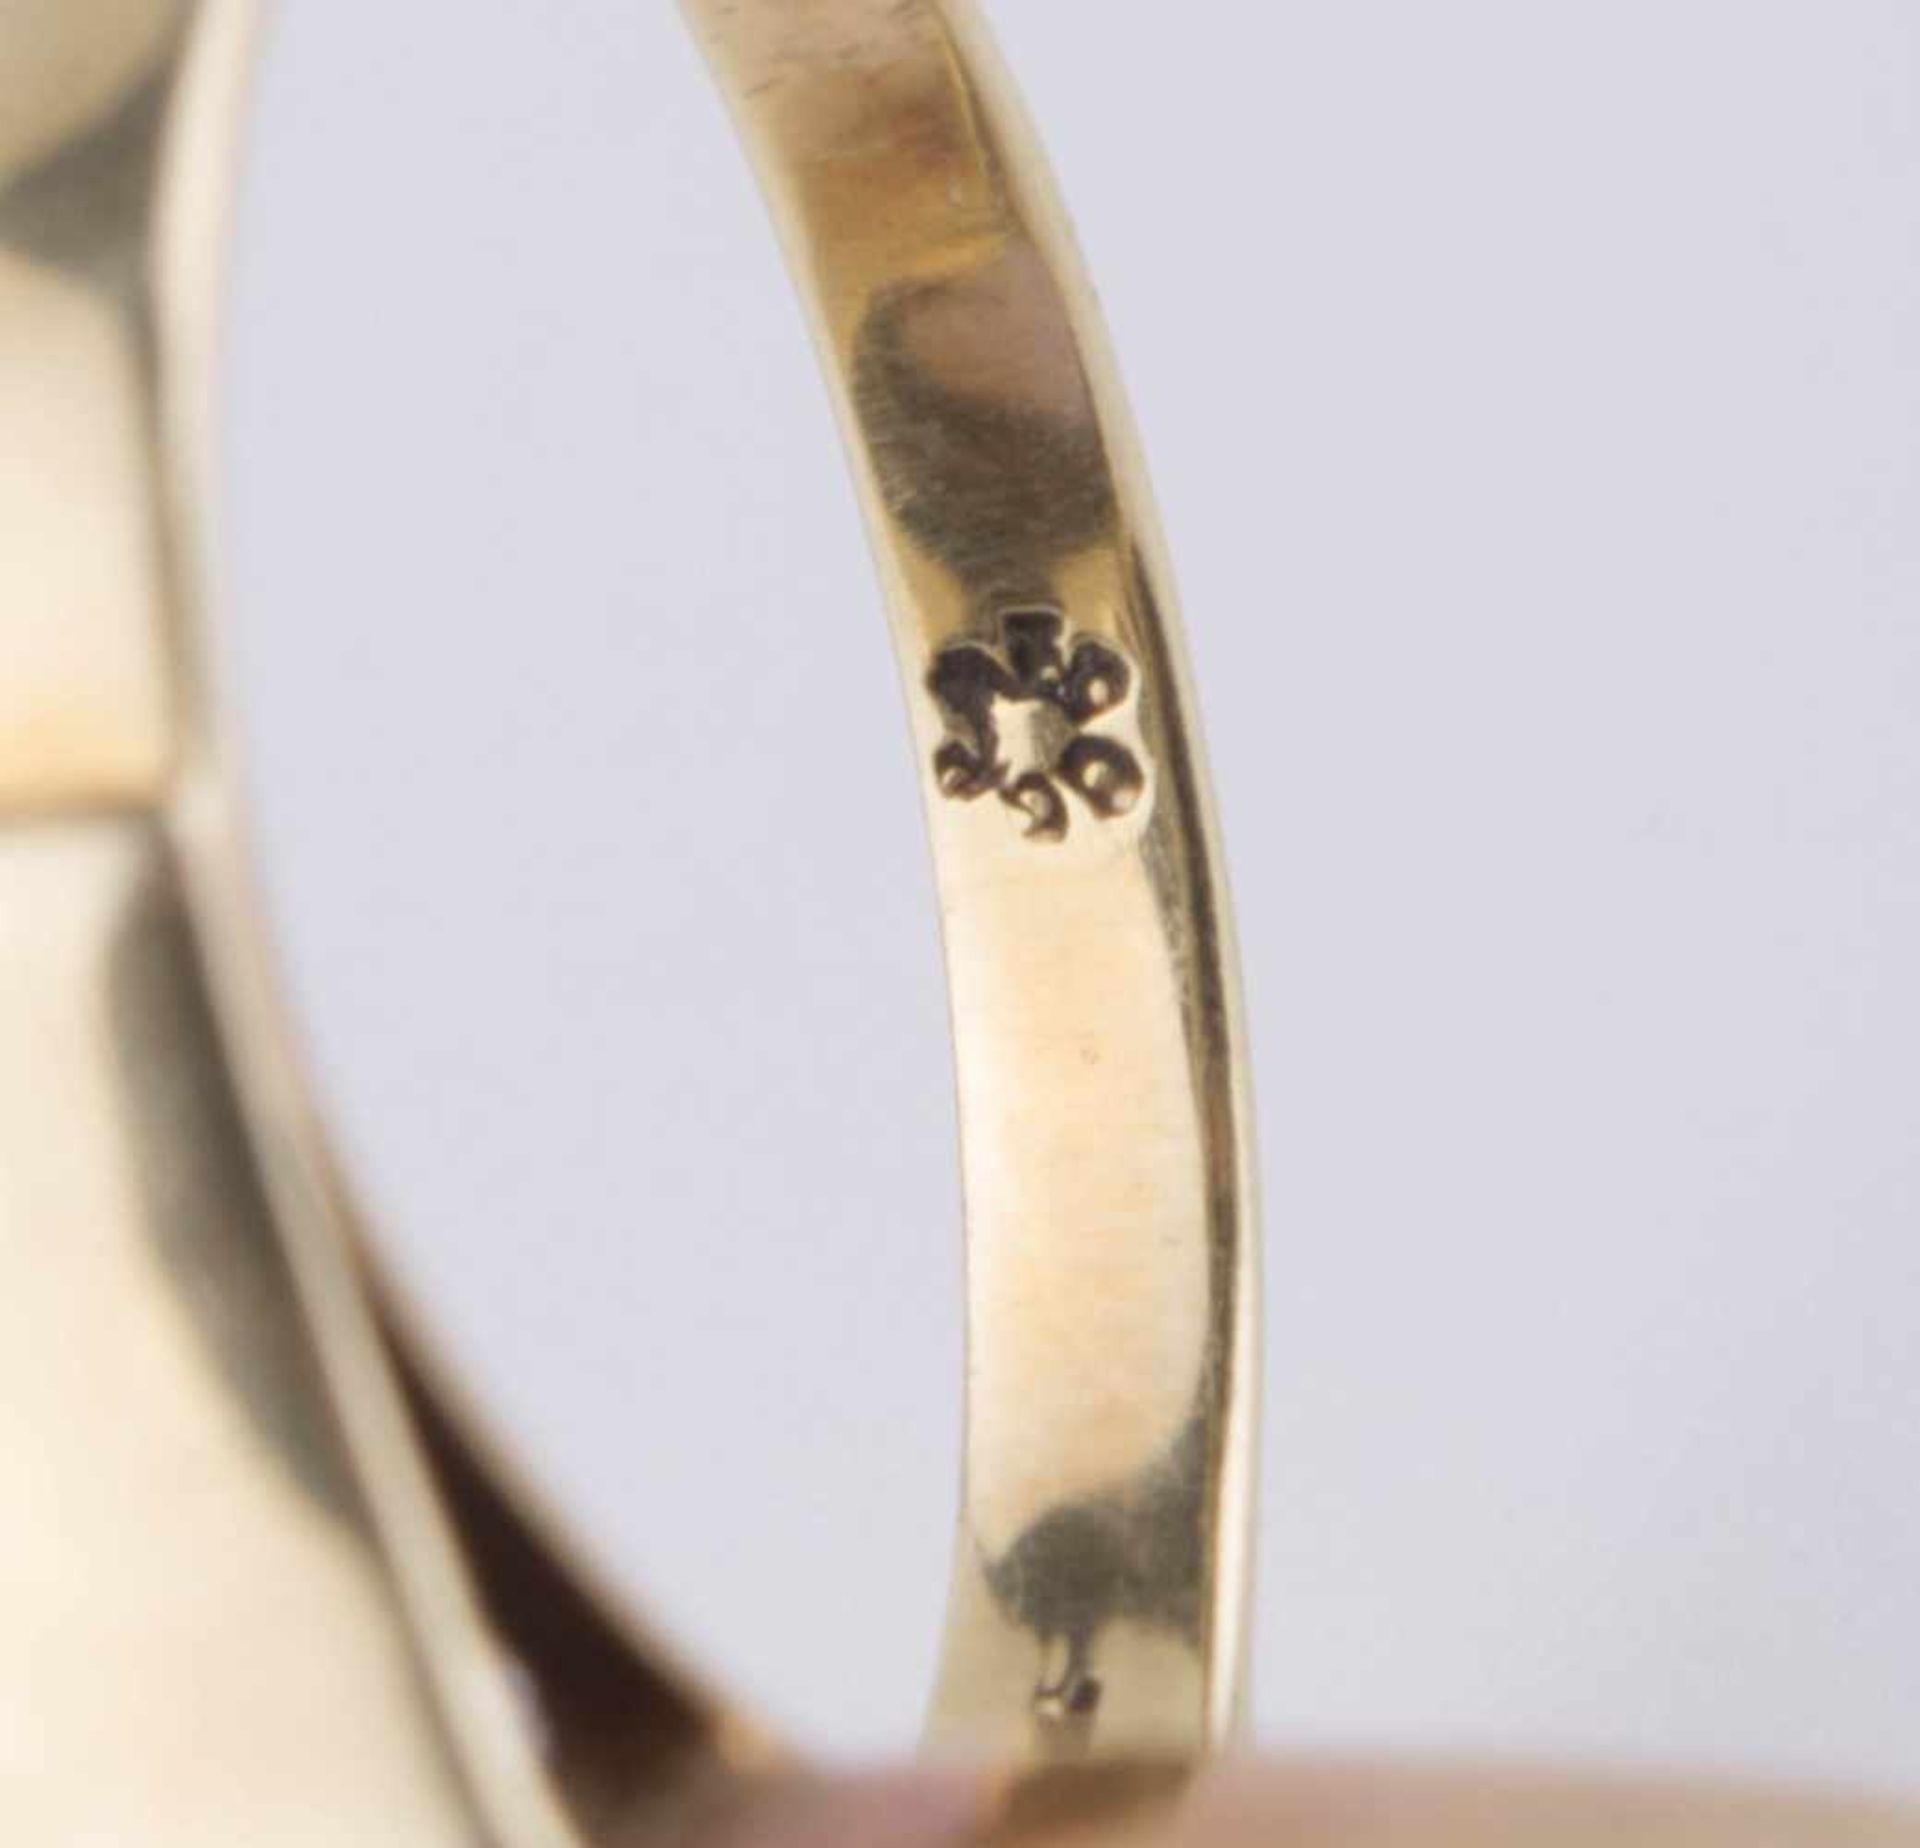 Damen Amethystring / Women's amethyst gold ring GG 585/000, RG ca. 58, Gesamtgewicht ca. 6 g. - Bild 9 aus 12